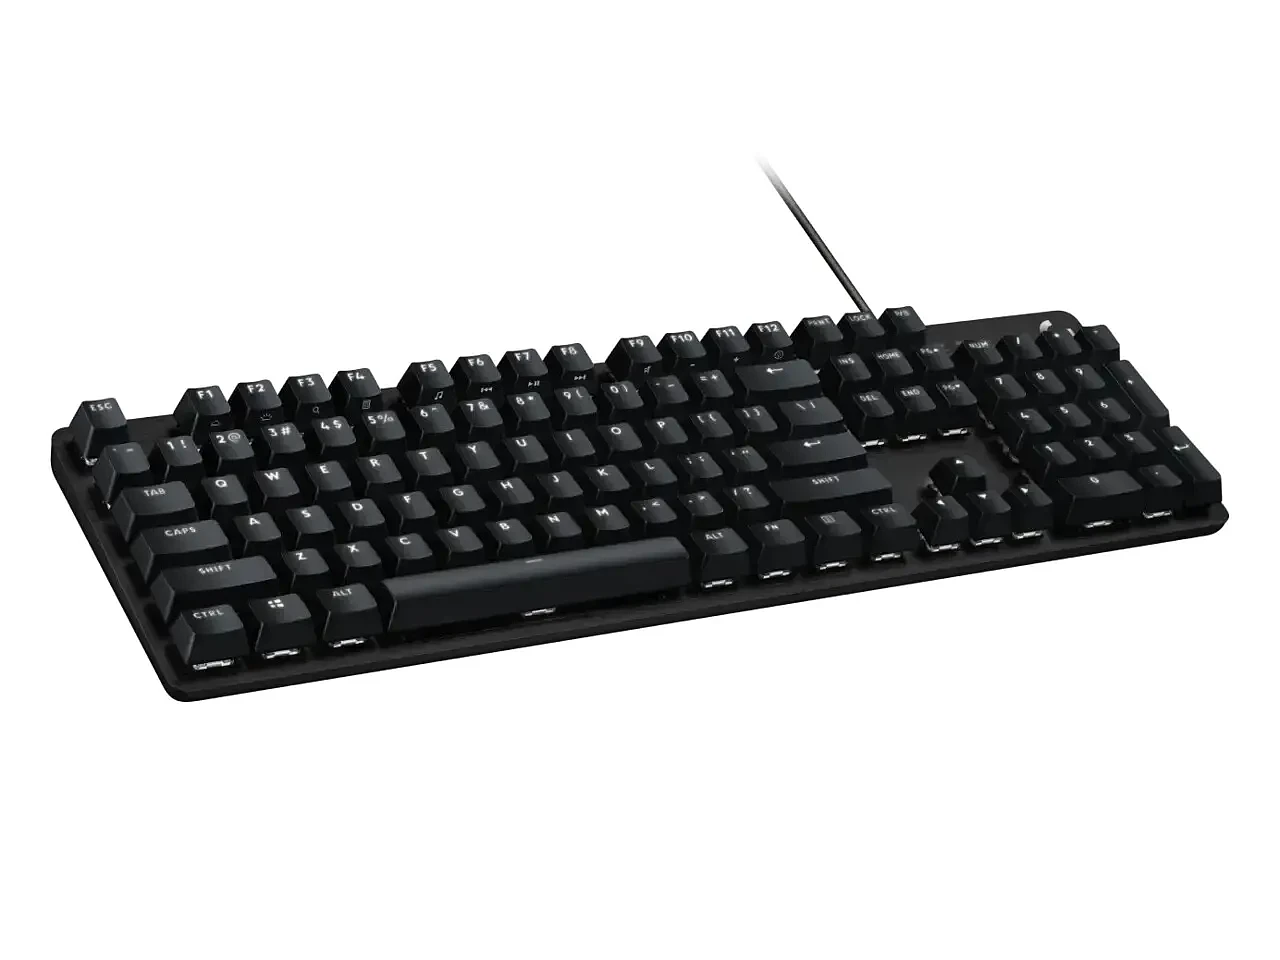 Logitech G413 SE/G413 TKL两款游戏机械键盘发布 - 2